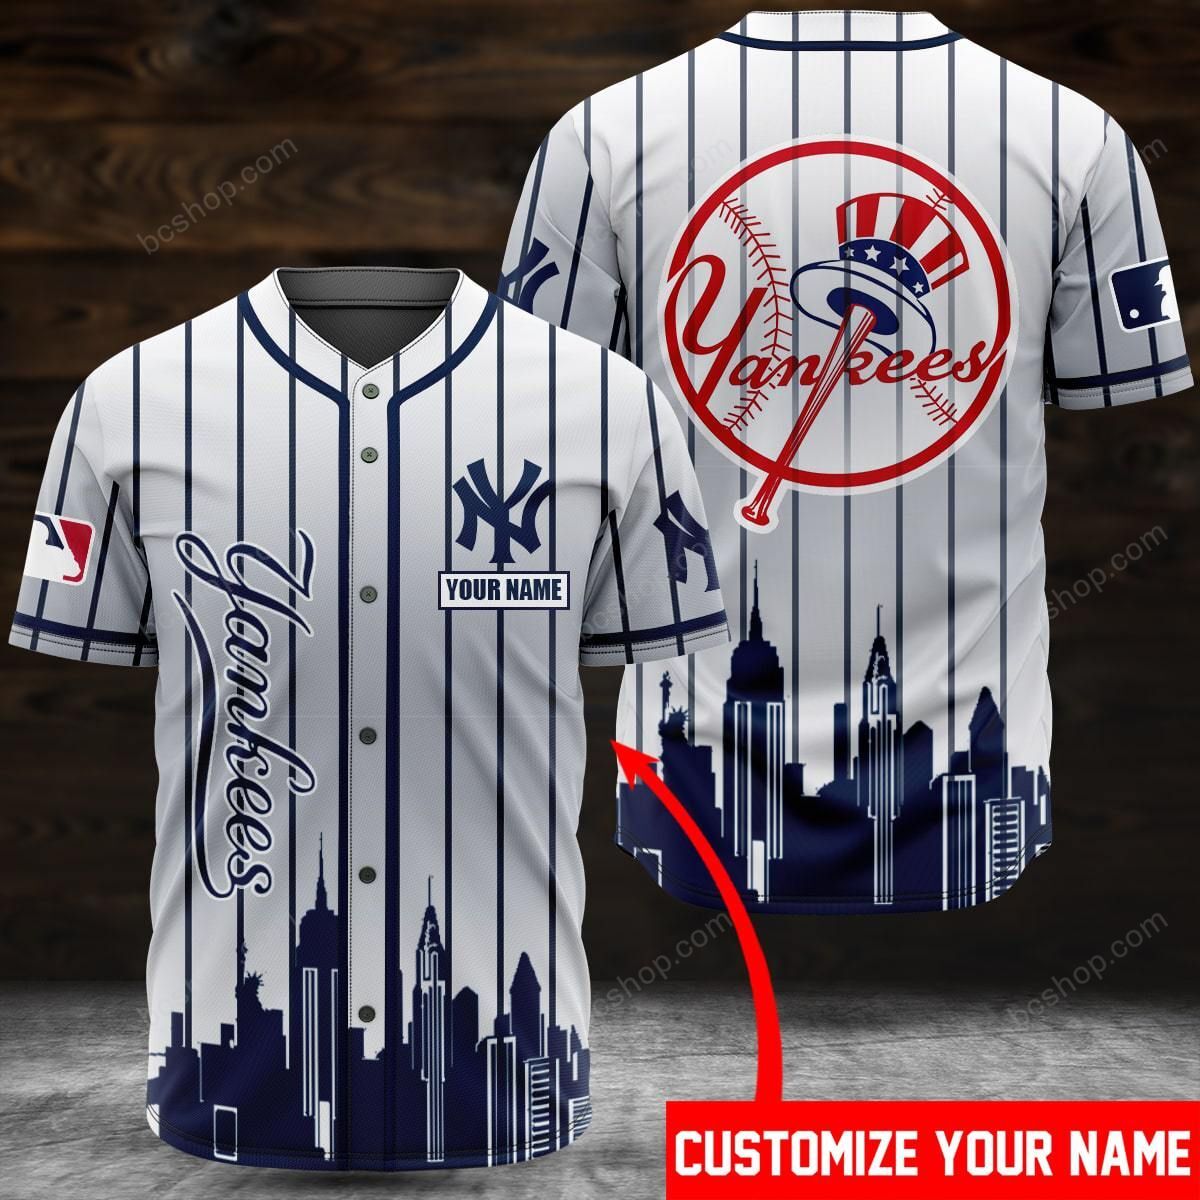 NYC Yankees custom name baseball jersey 2